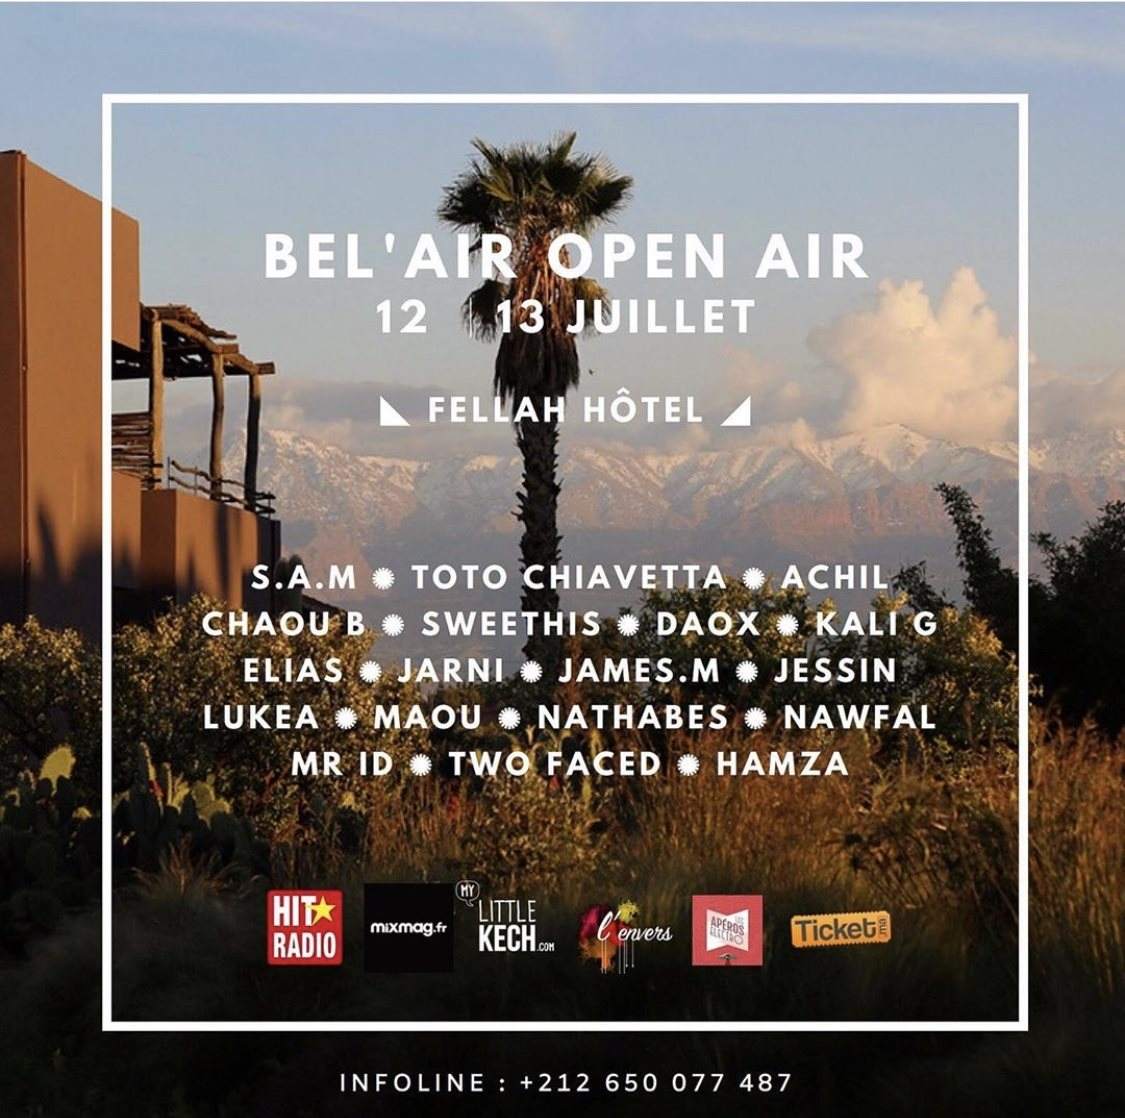 Bel'air Festival 2019 - Página frontal